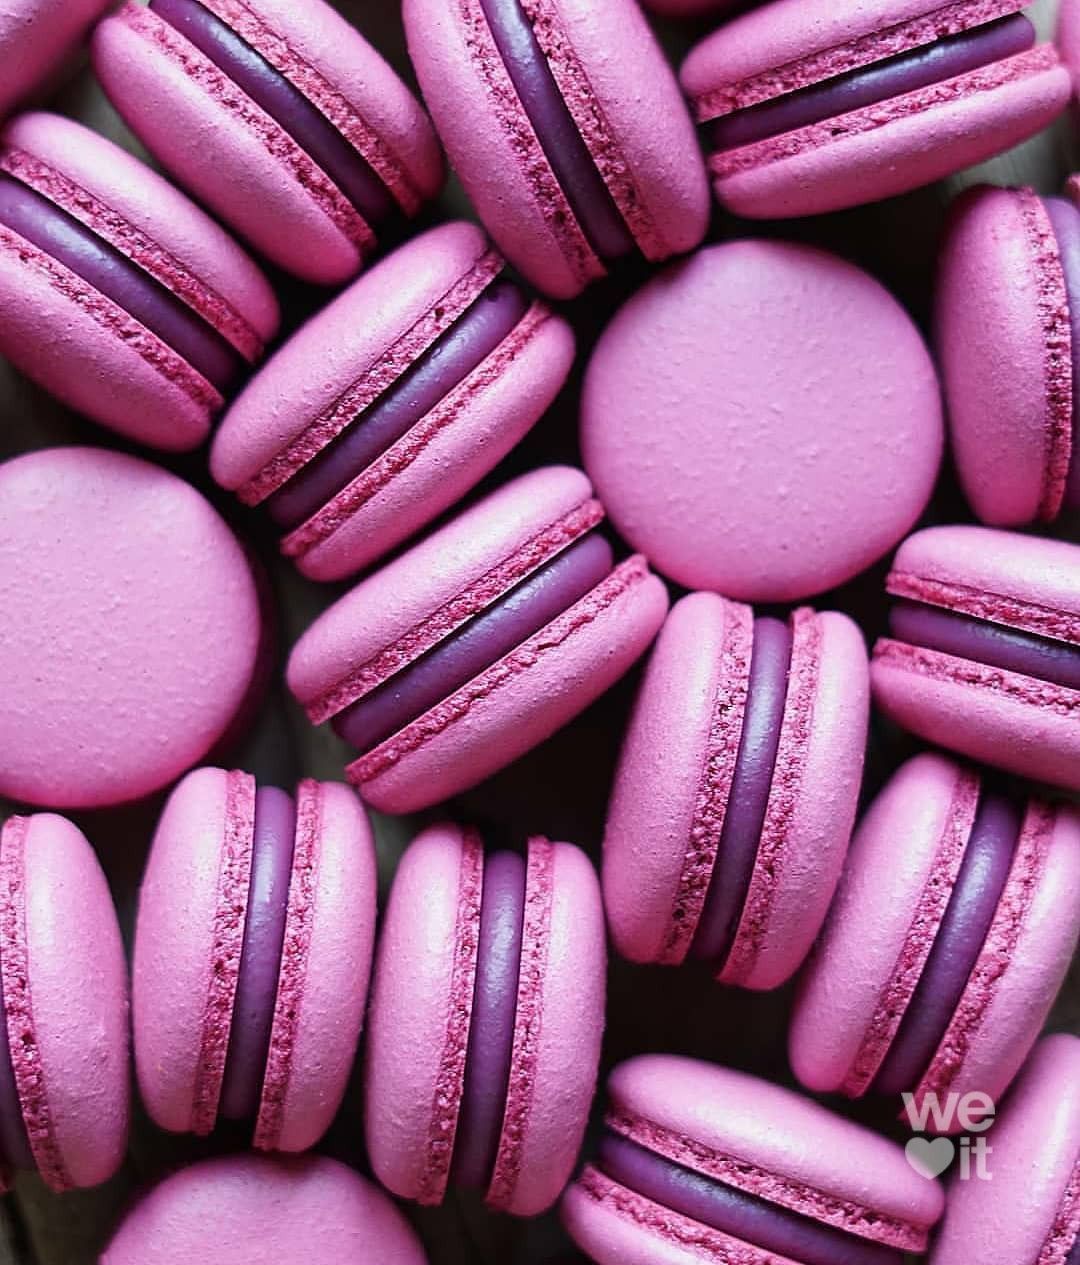 A pile of pink and purple macarons - Macarons